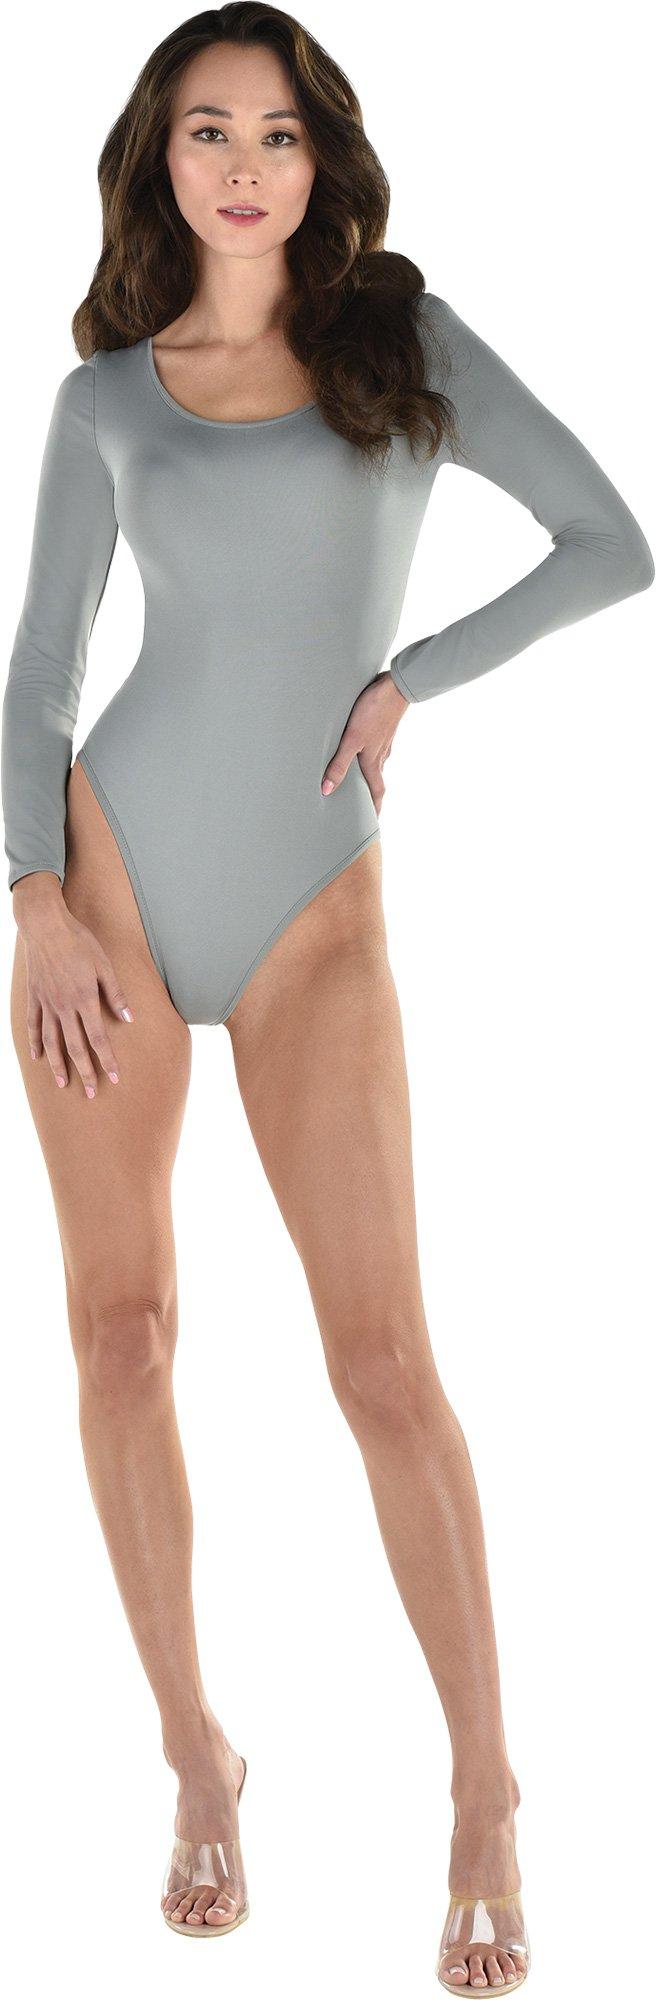 Adult Long-Sleeve Gray Bodysuit